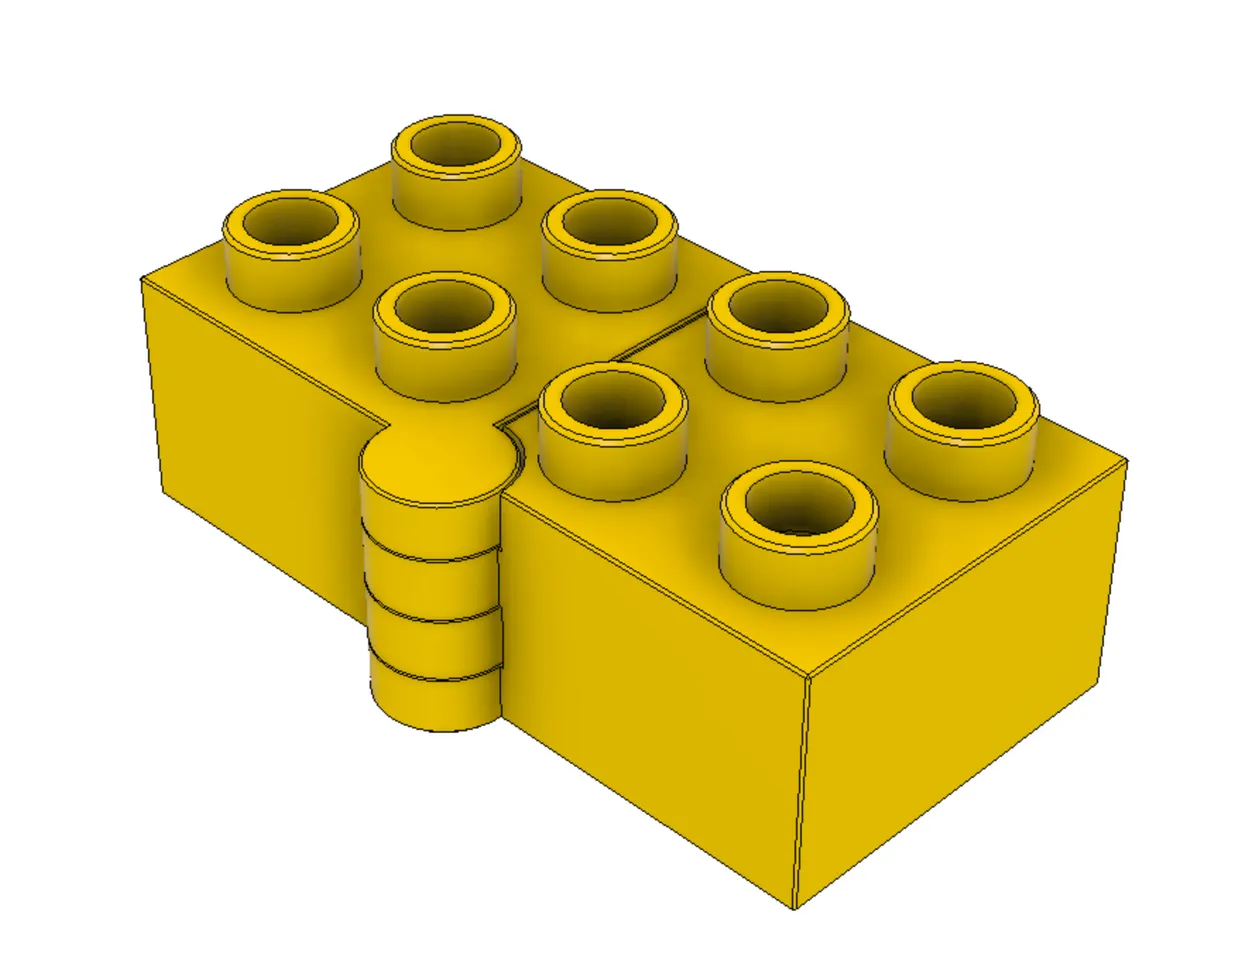 How to make 3D printed LEGO and LEGO Duplo parts - Original Prusa